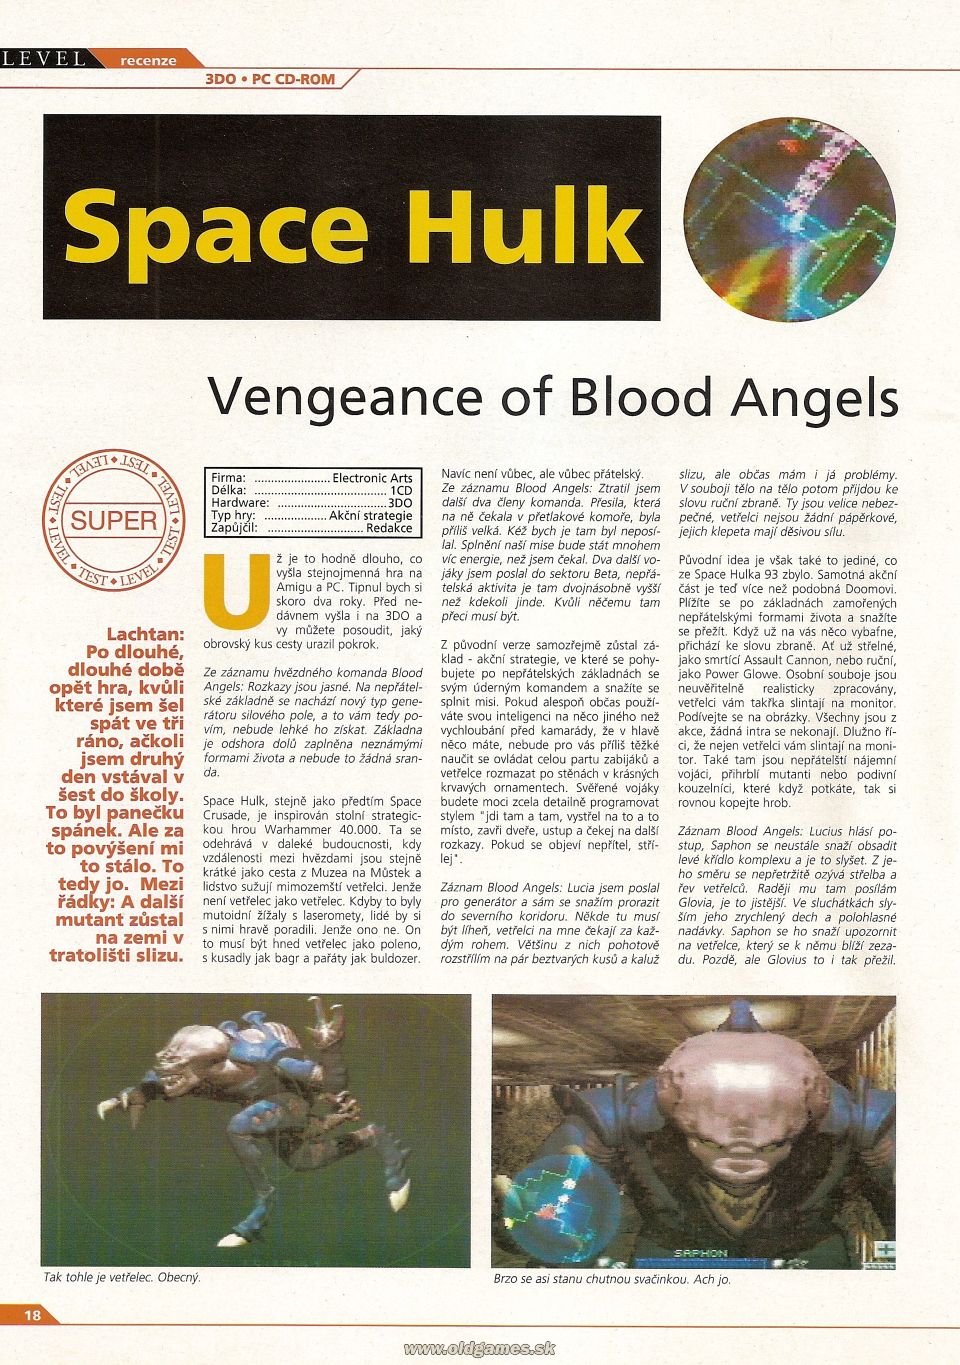 Space Hulk: Vengeance of Blood Angels